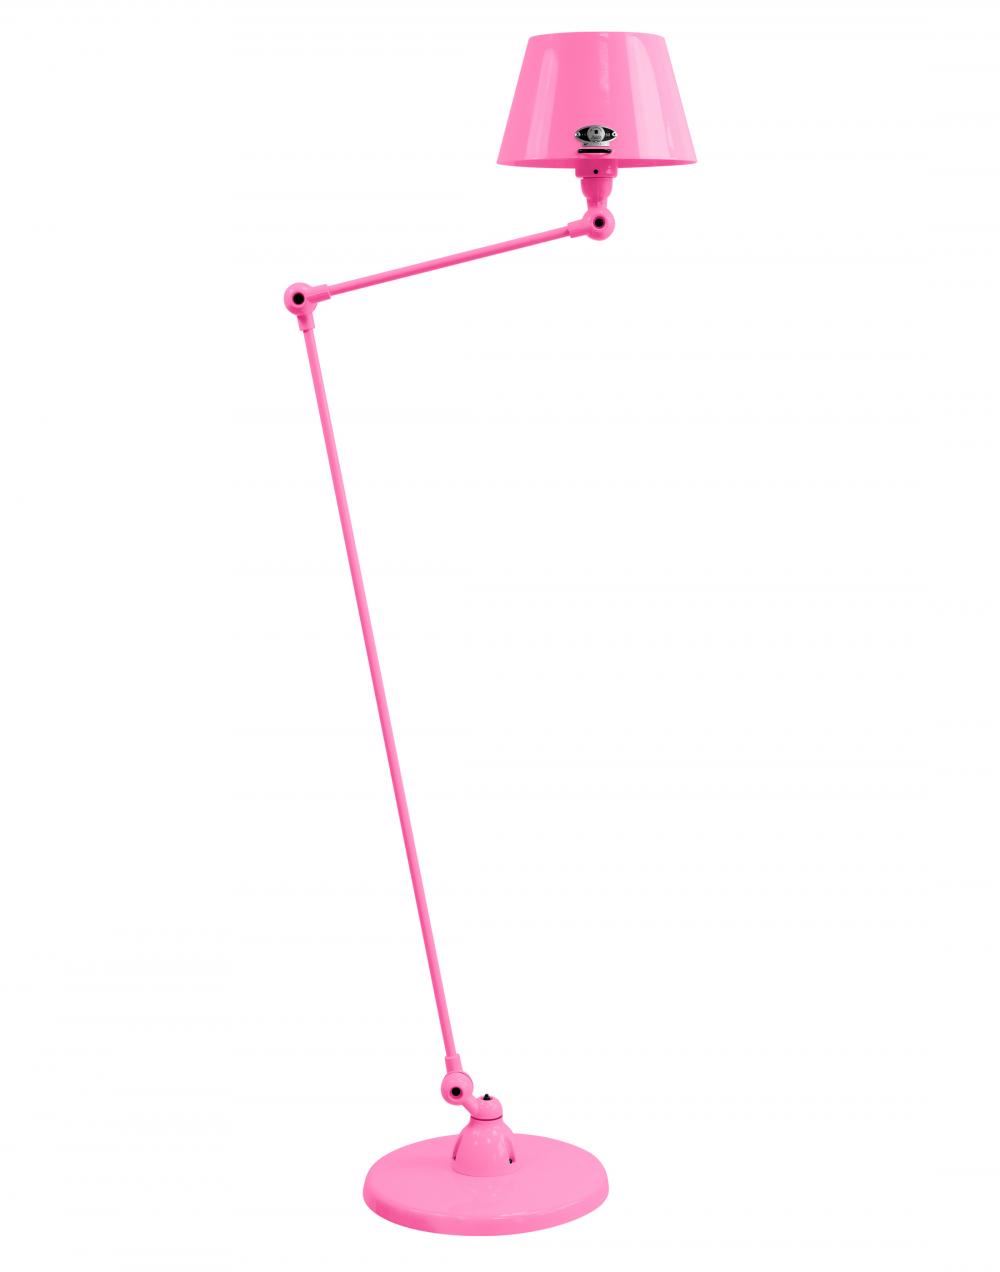 Jielde Aicler Two Arm Floor Light Straight Shade Pink Matt